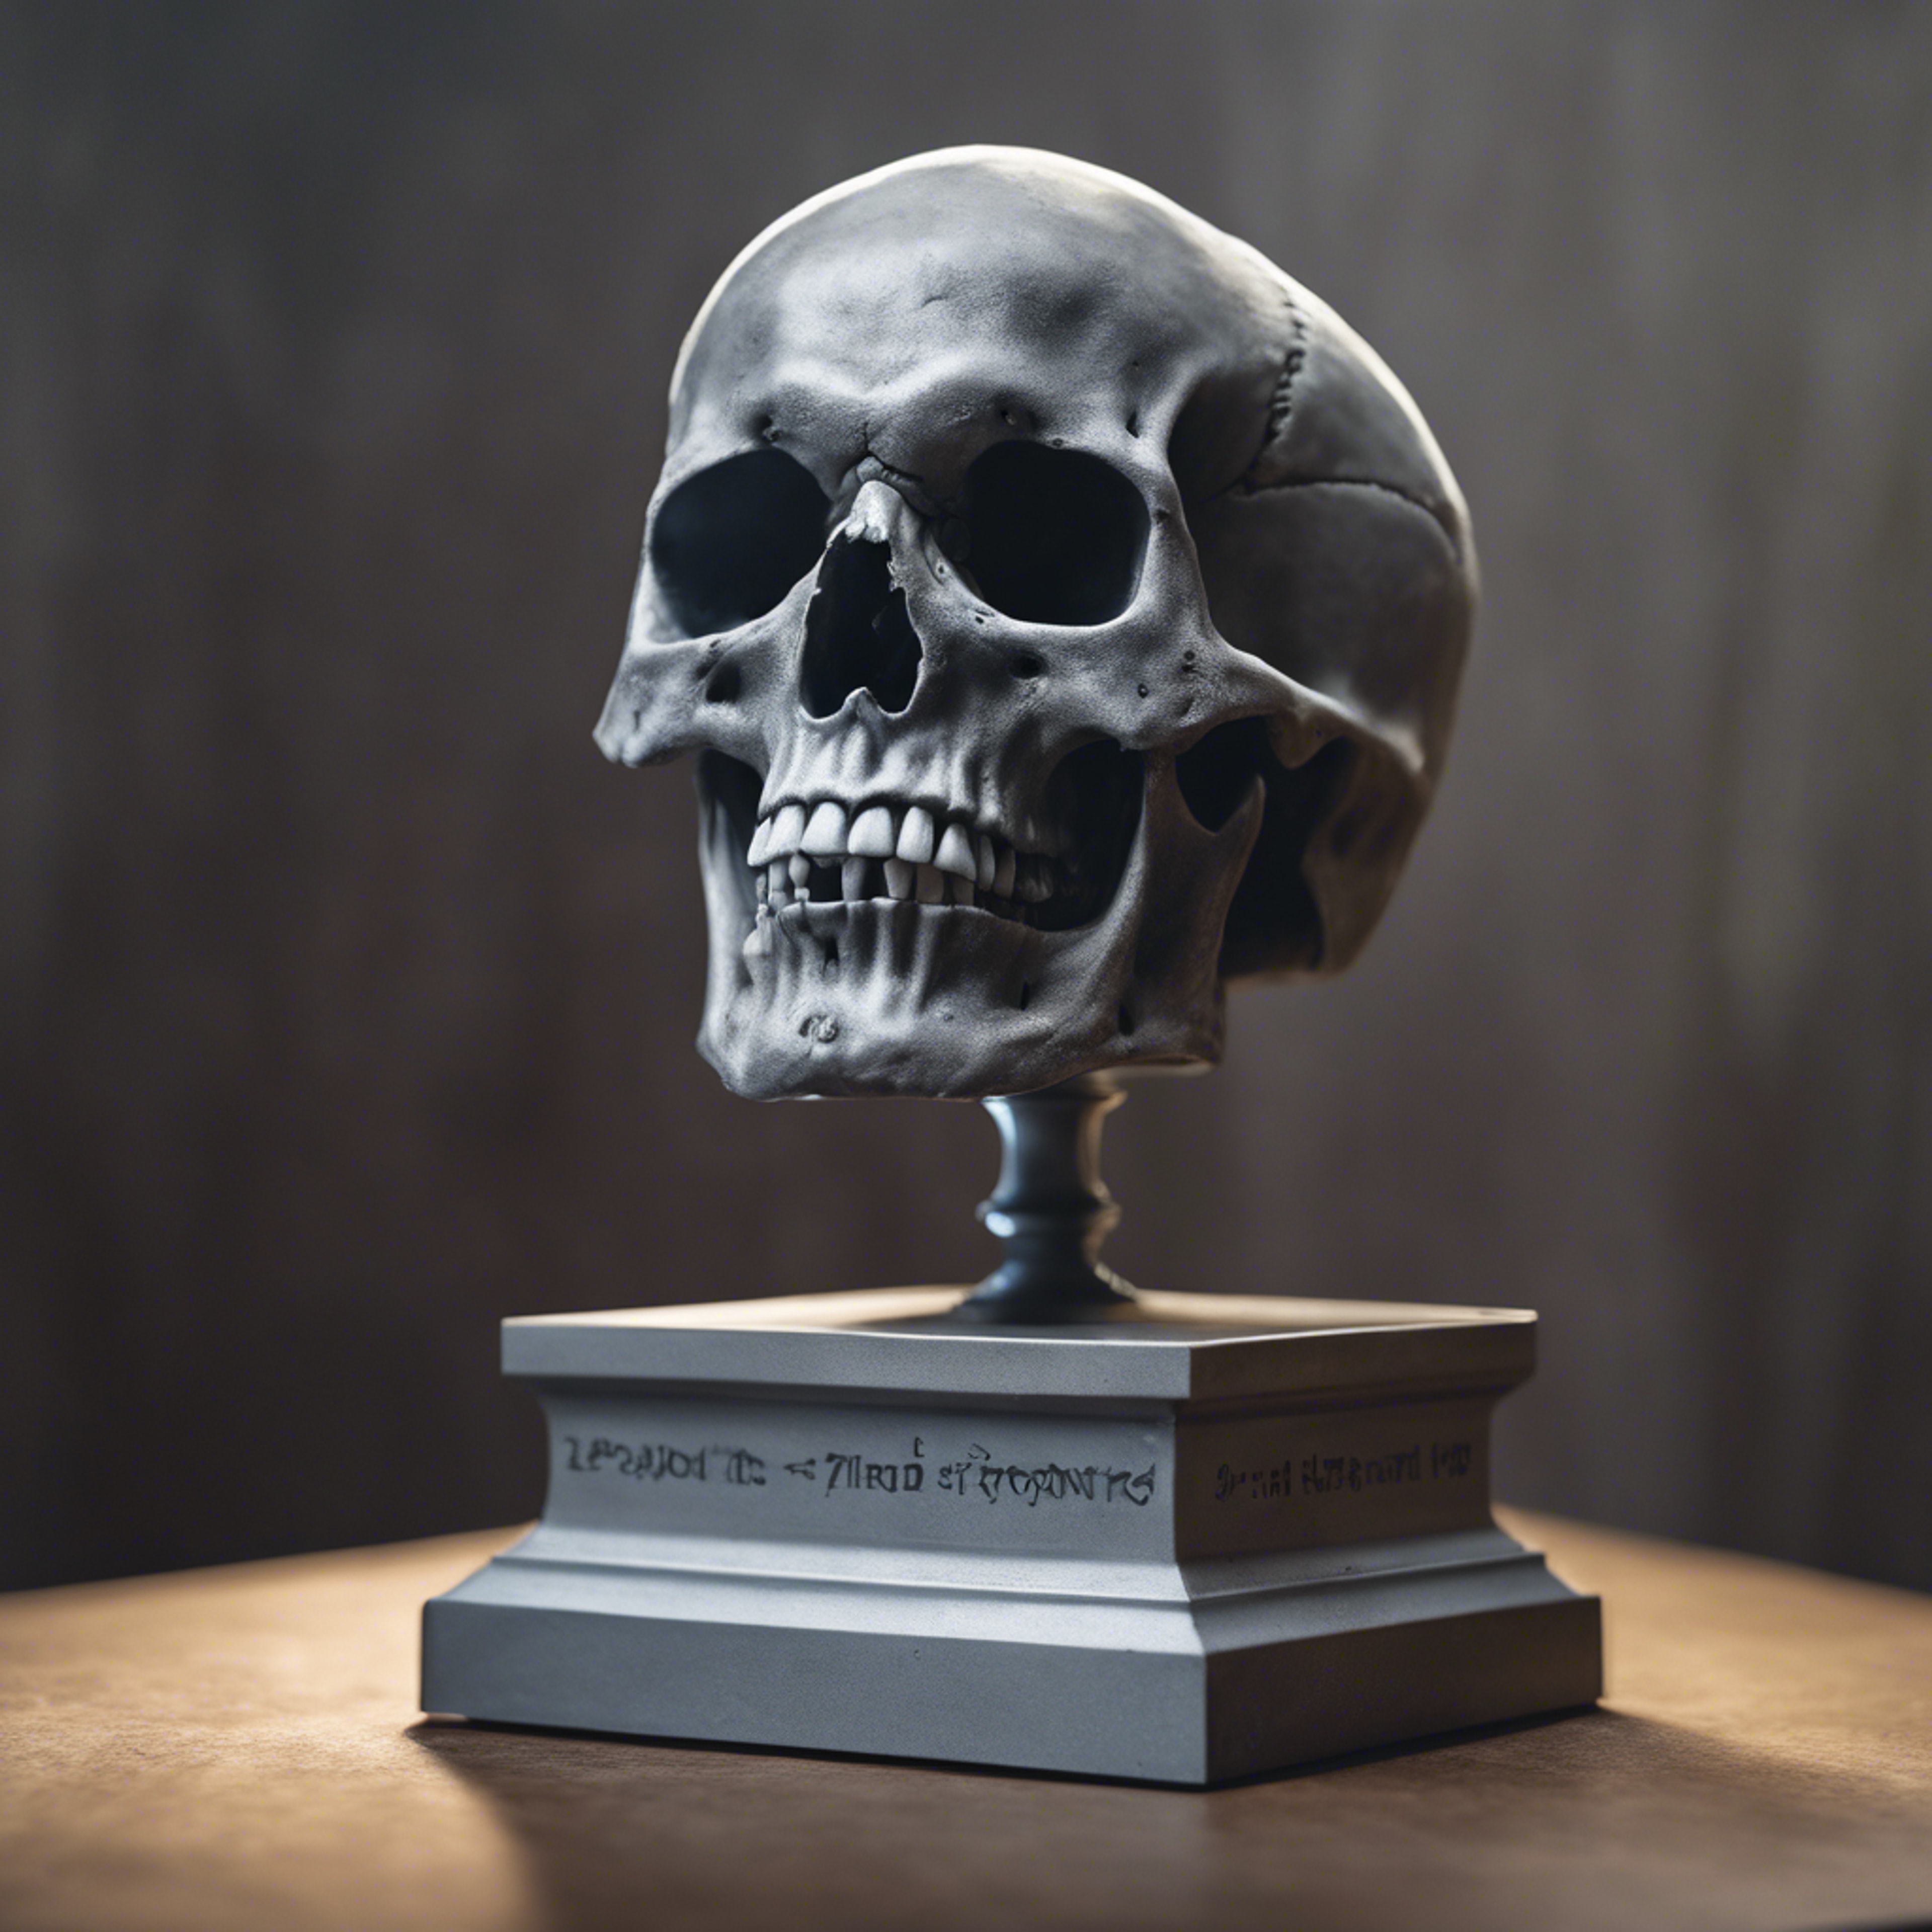 A spot-lit gray skull on a pedestal, starring in a classic horror movie scene. ផ្ទាំង​រូបភាព[96b08be545414606ae5a]